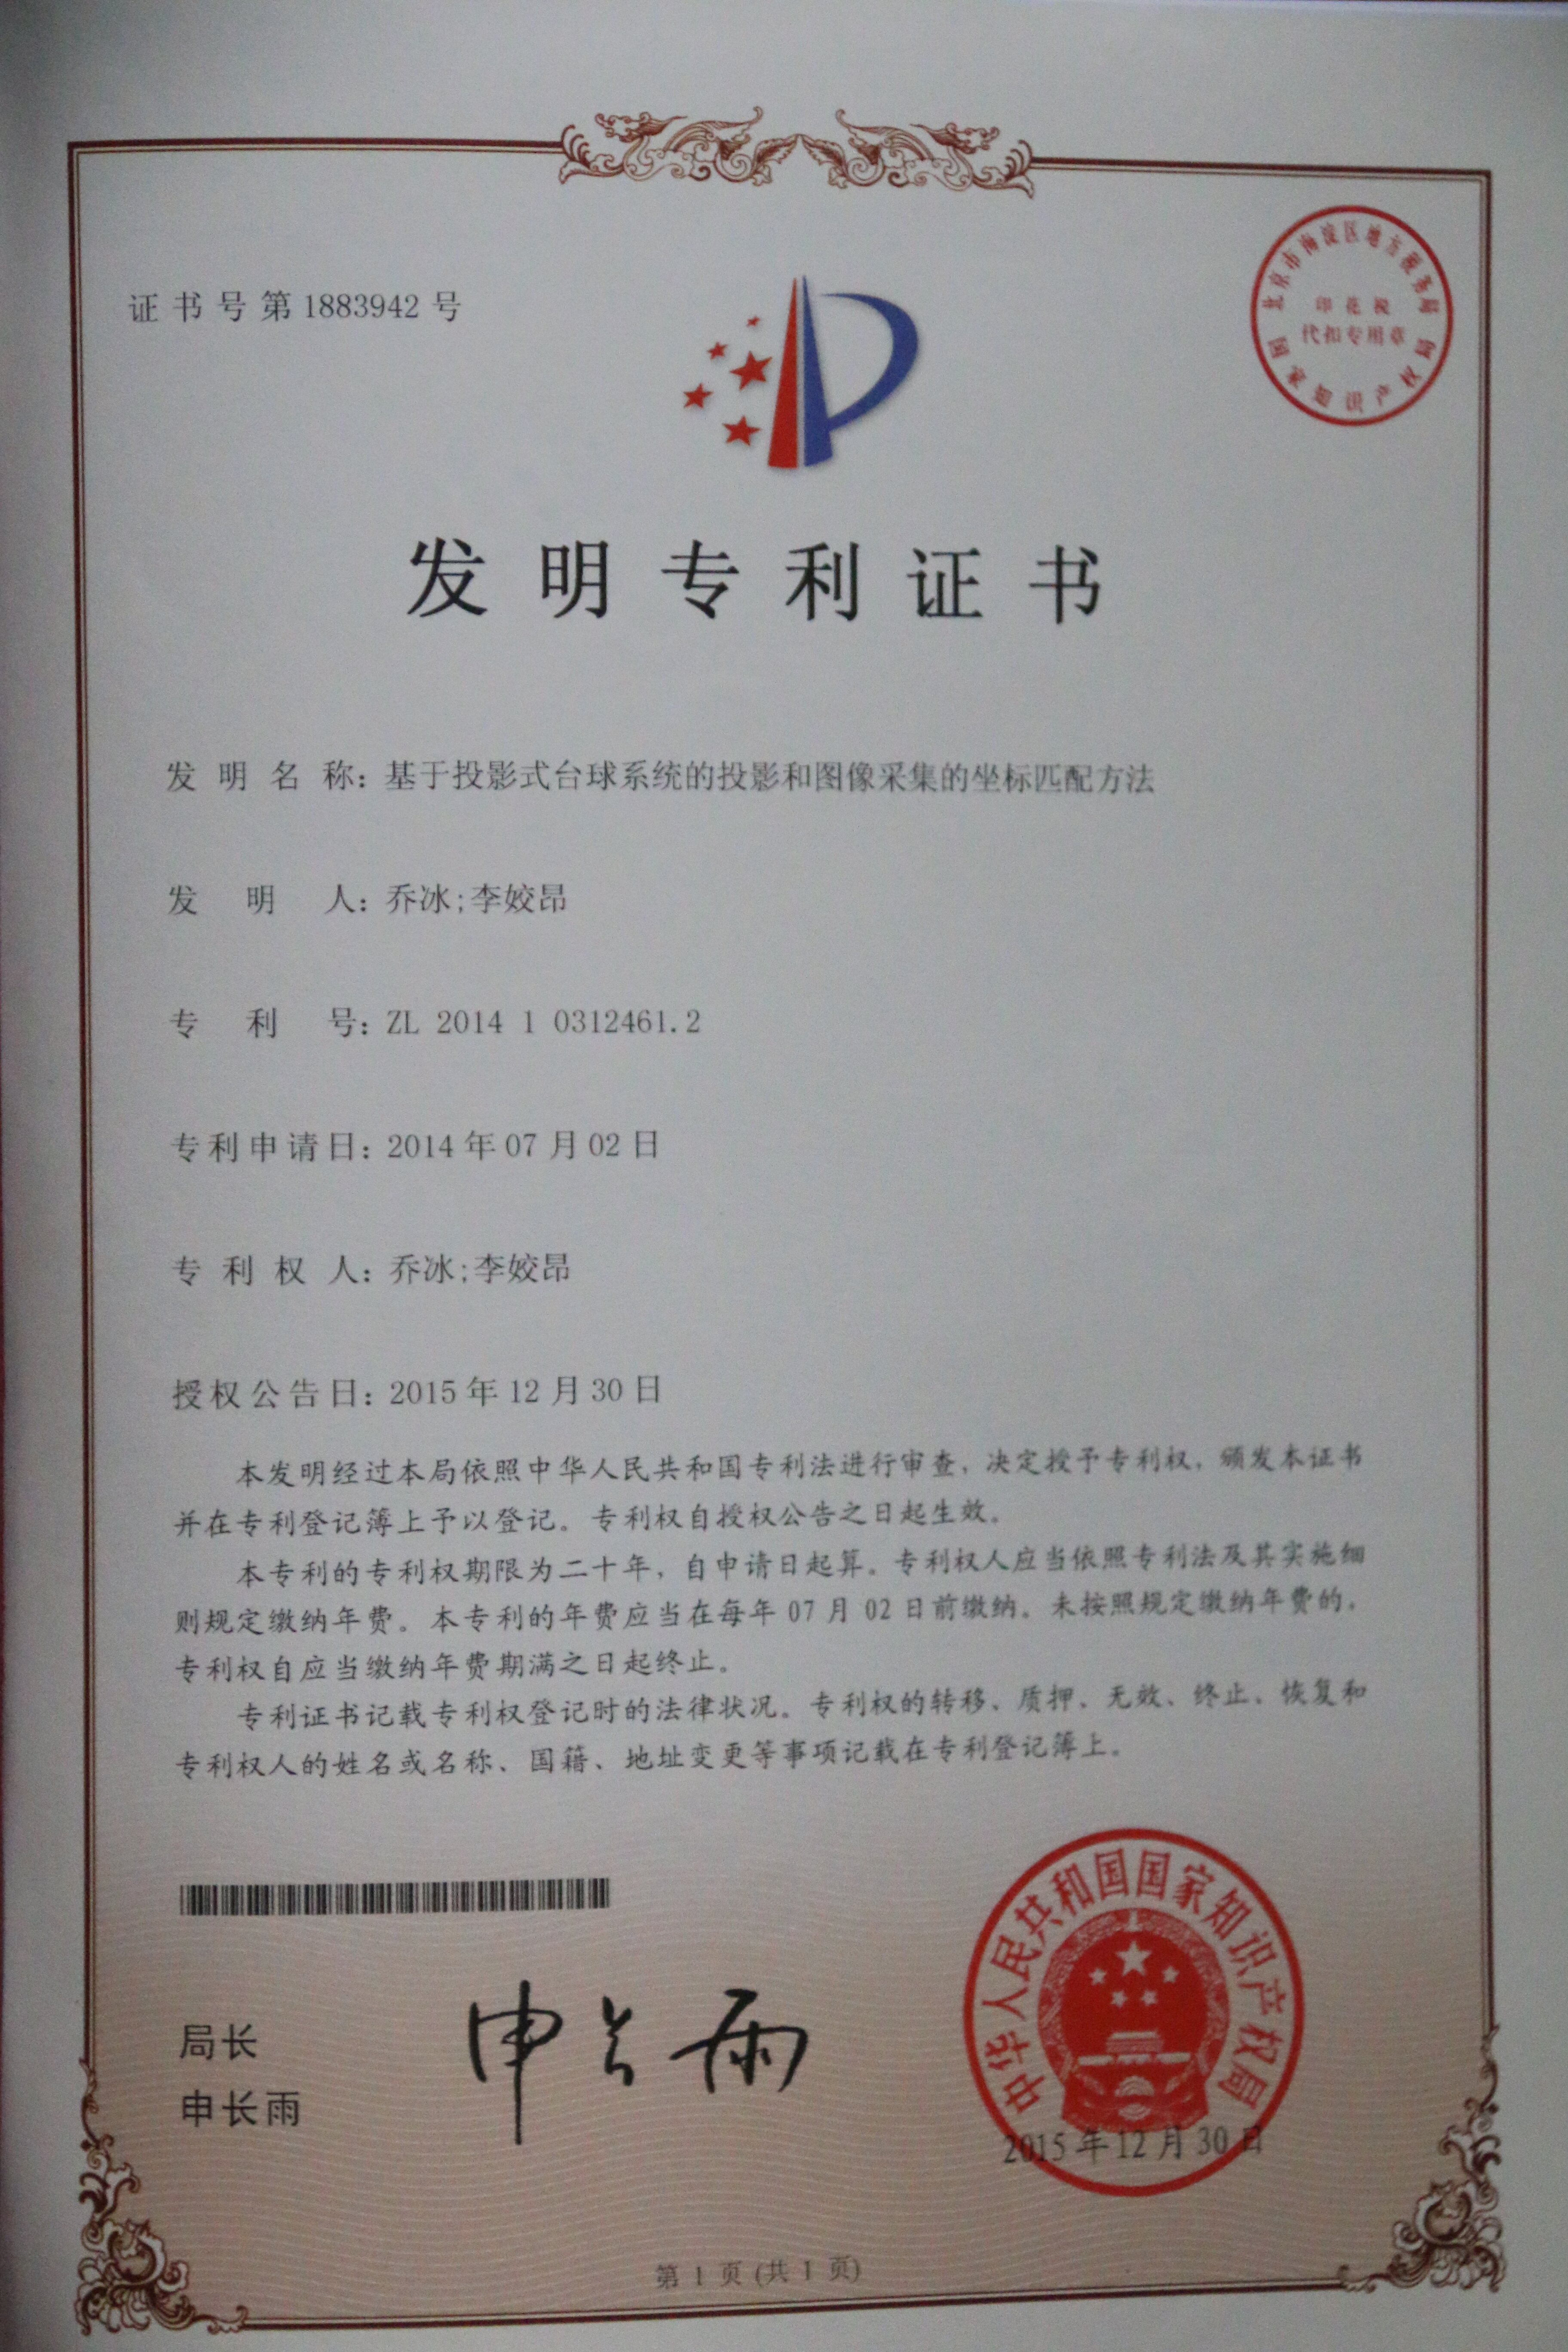 Ipool Patent Certificate